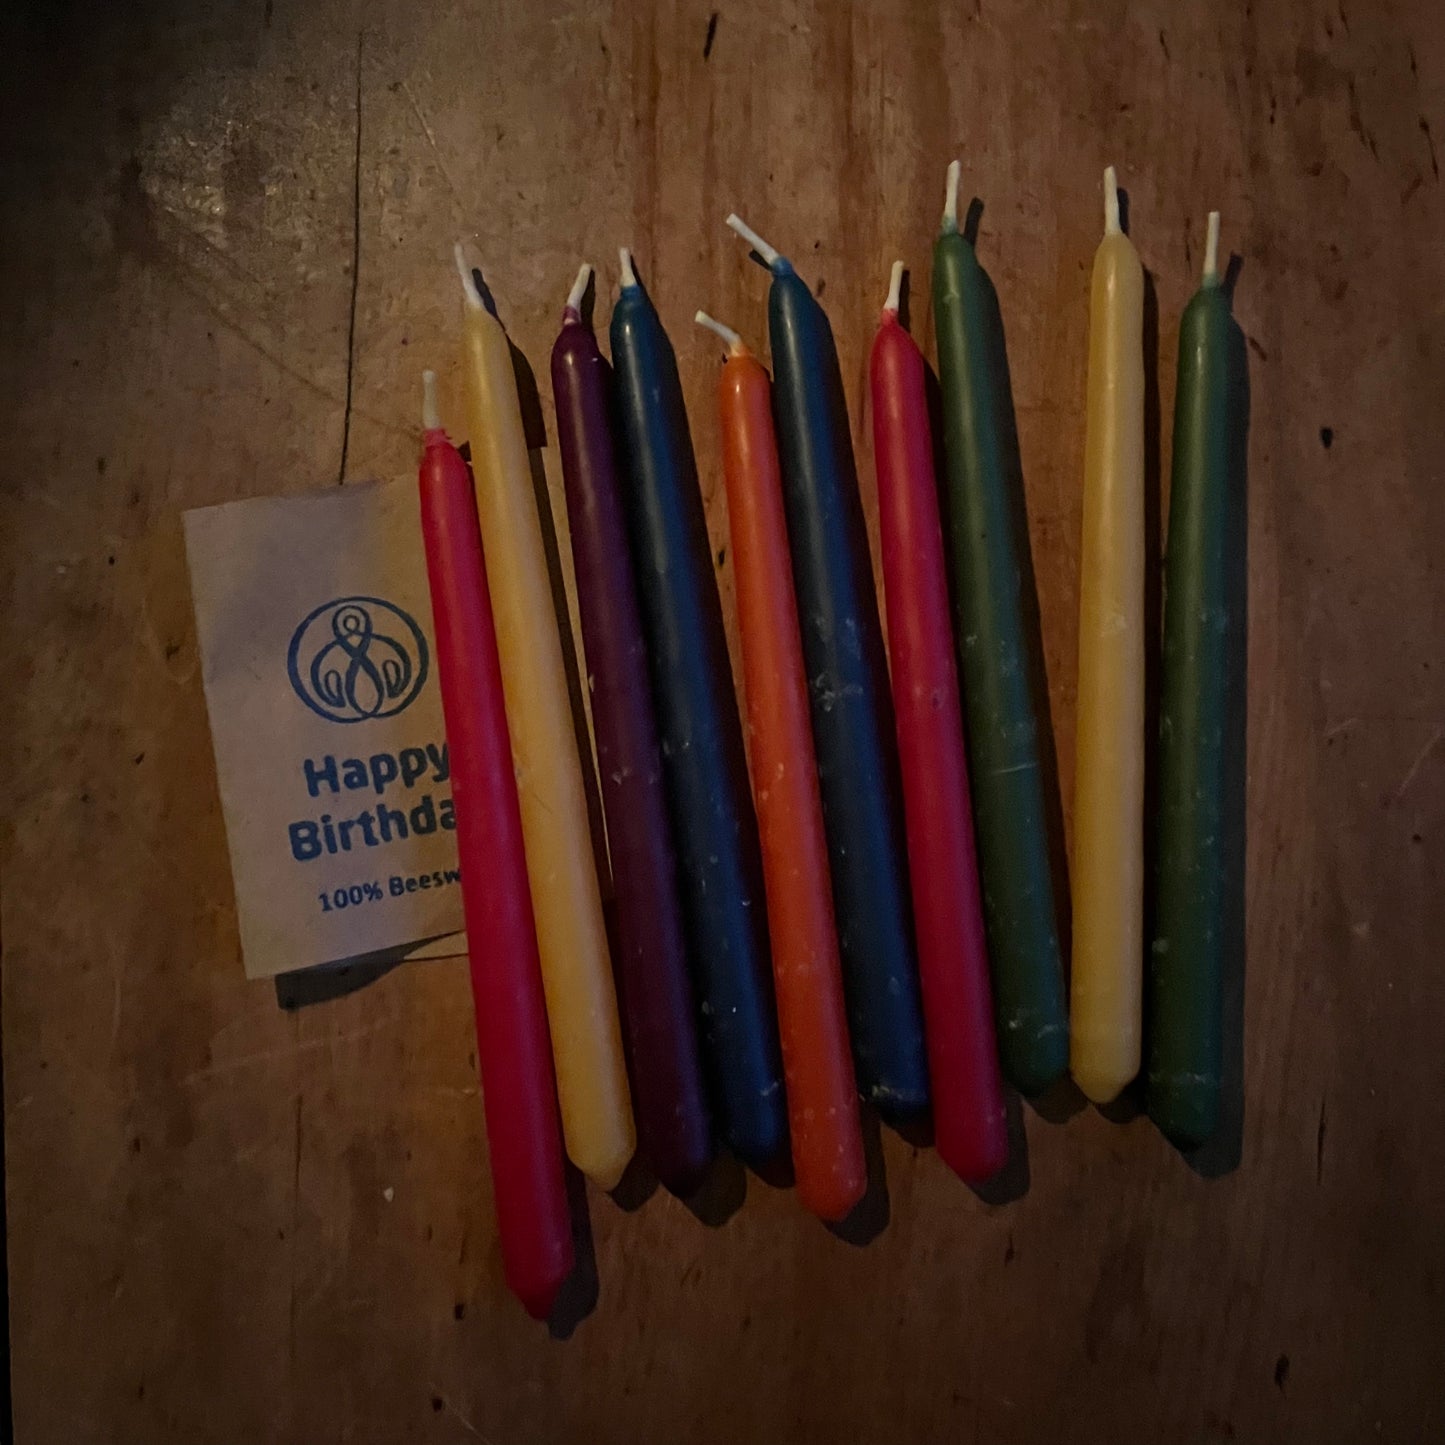 Hohepa Beeswax Birthday Candles